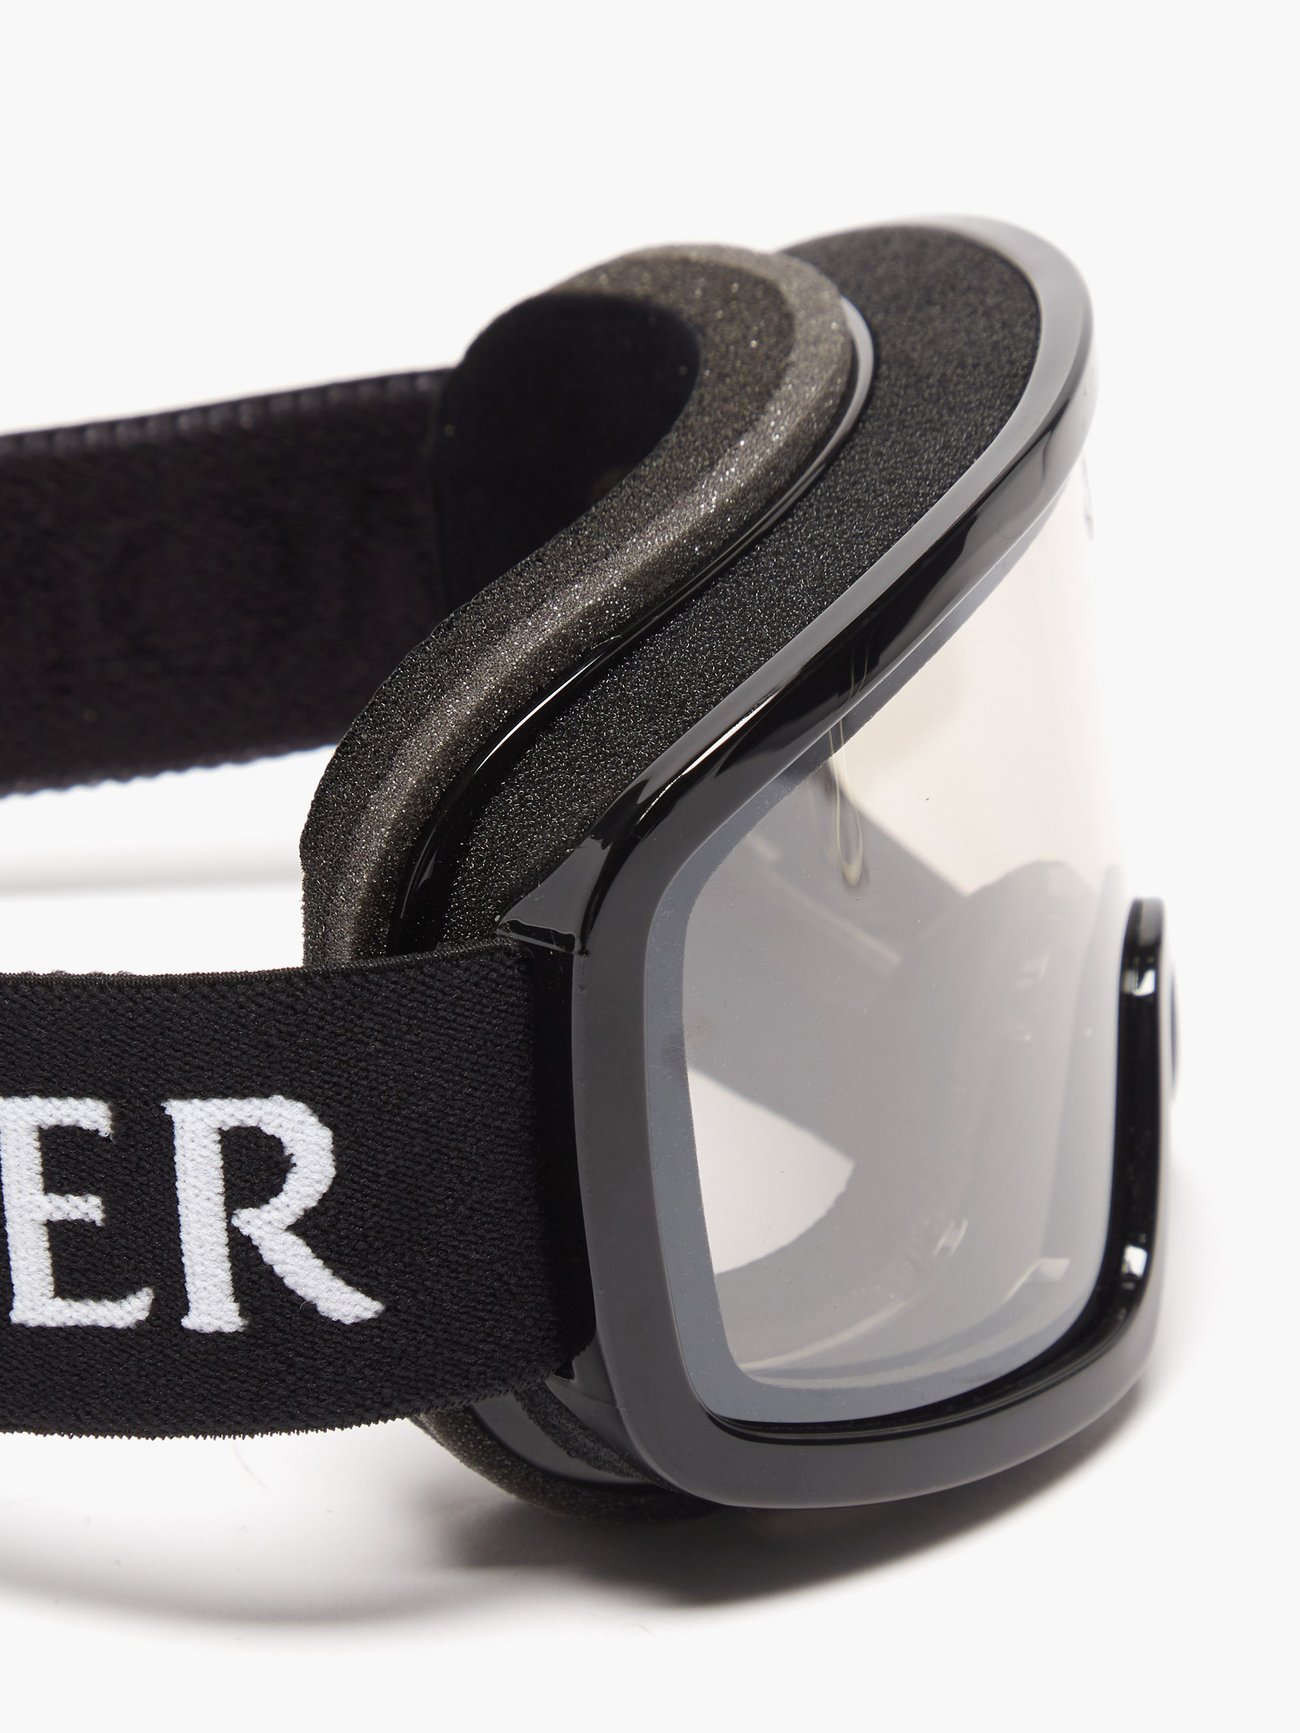 MONCLER EYEWEAR Terrabeam S1 Photochromatic Ski Goggles for Men